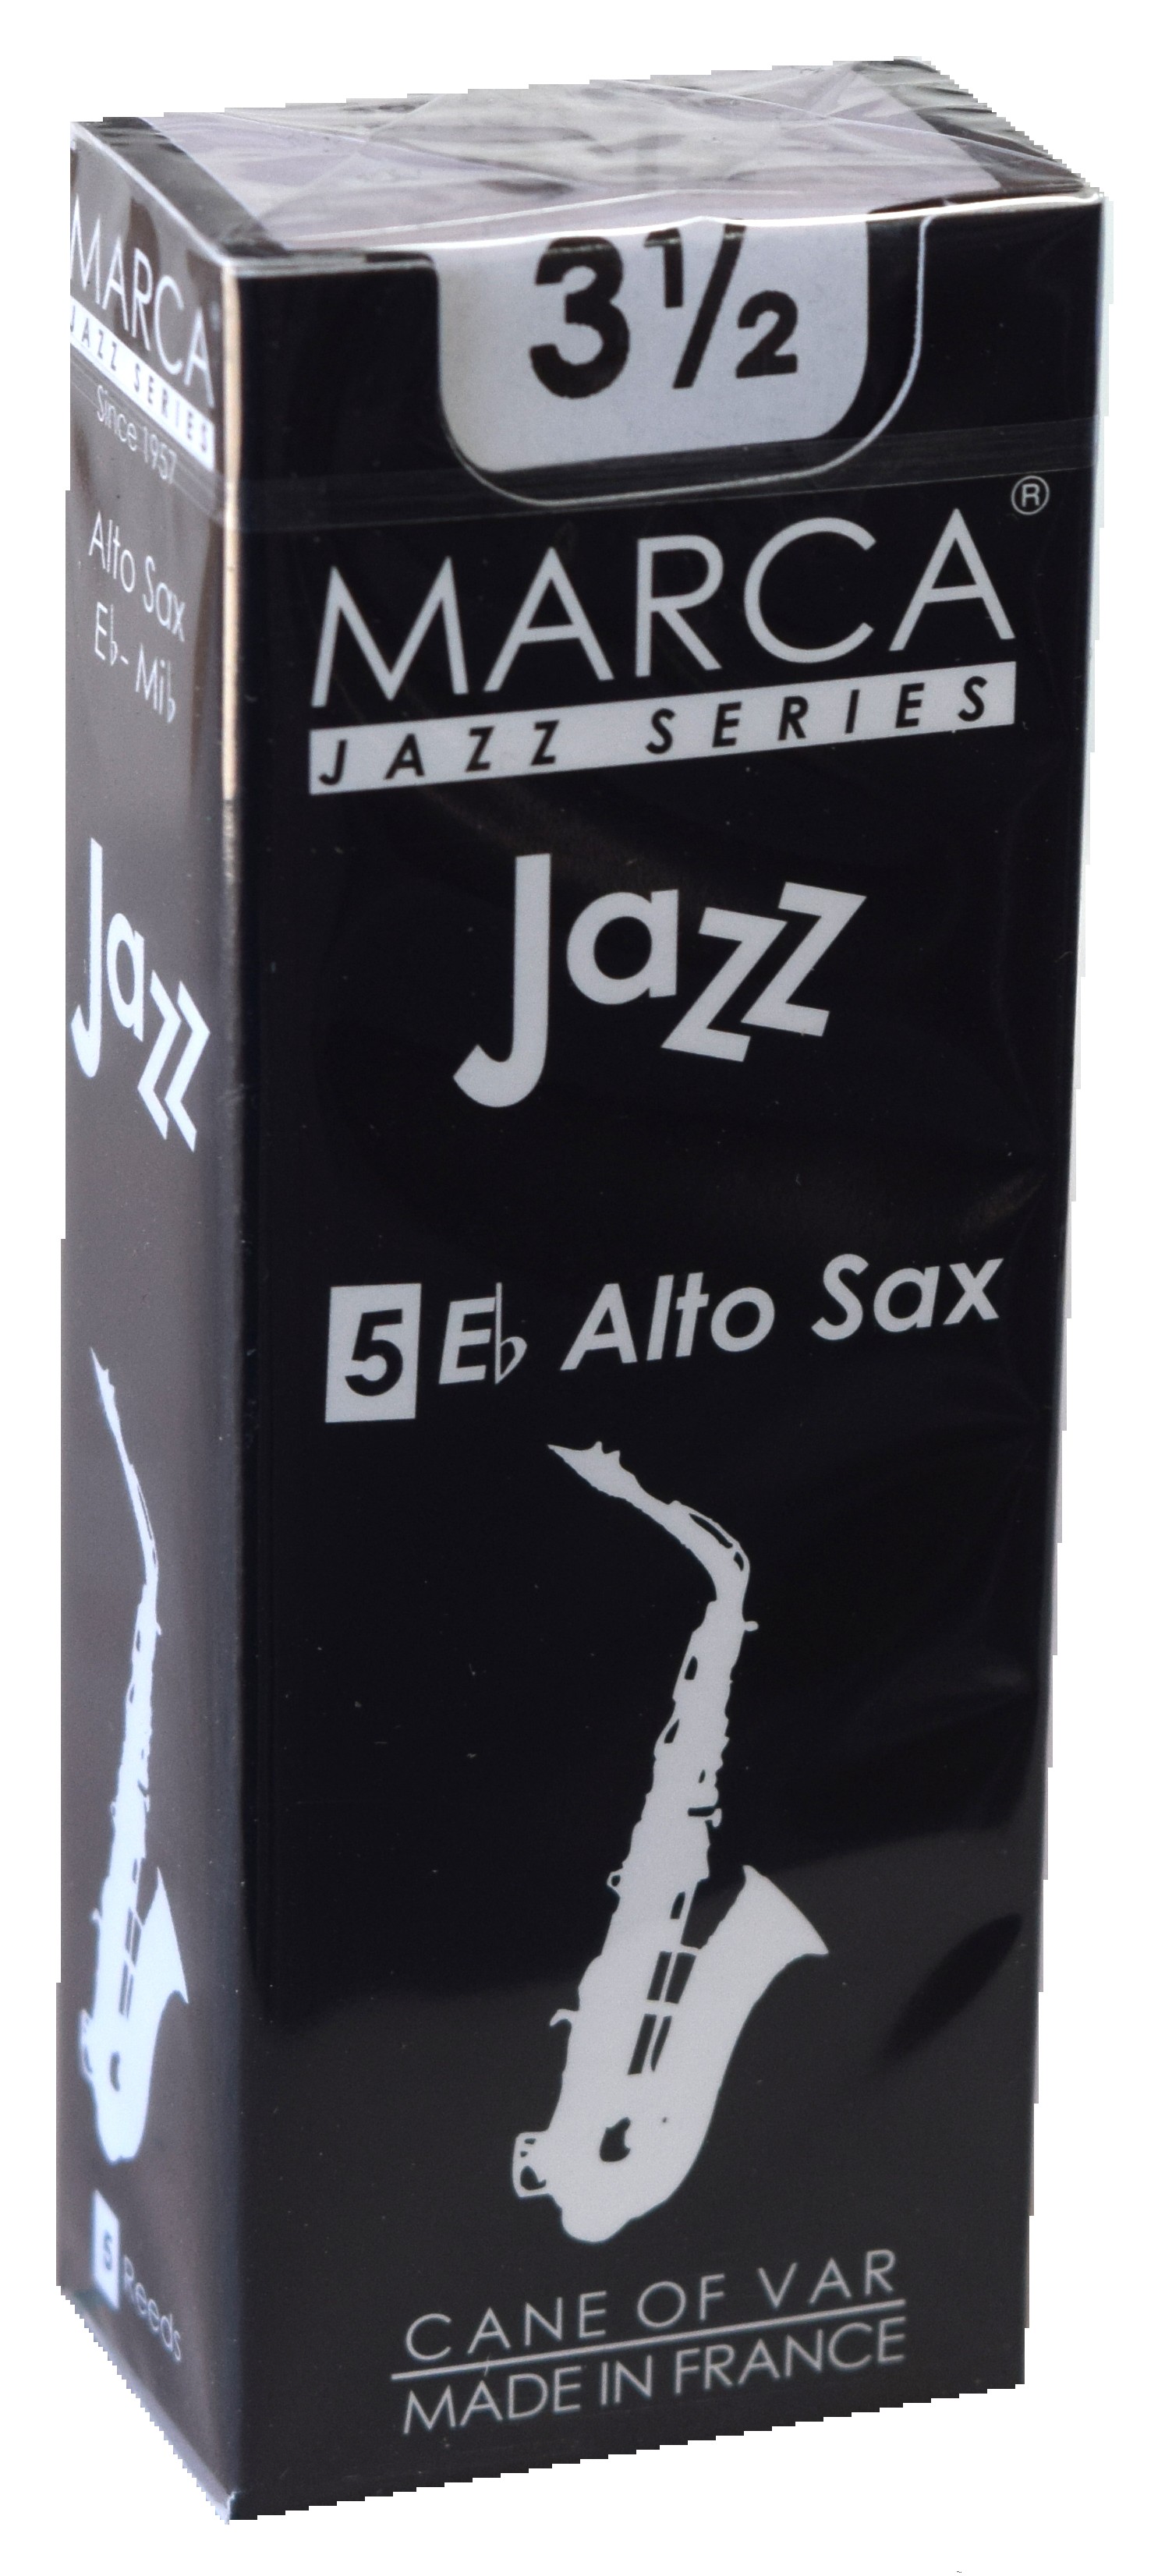 Marca Jazz Series - Alto Saxophone Reeds (Box of 5) - 3 1/2